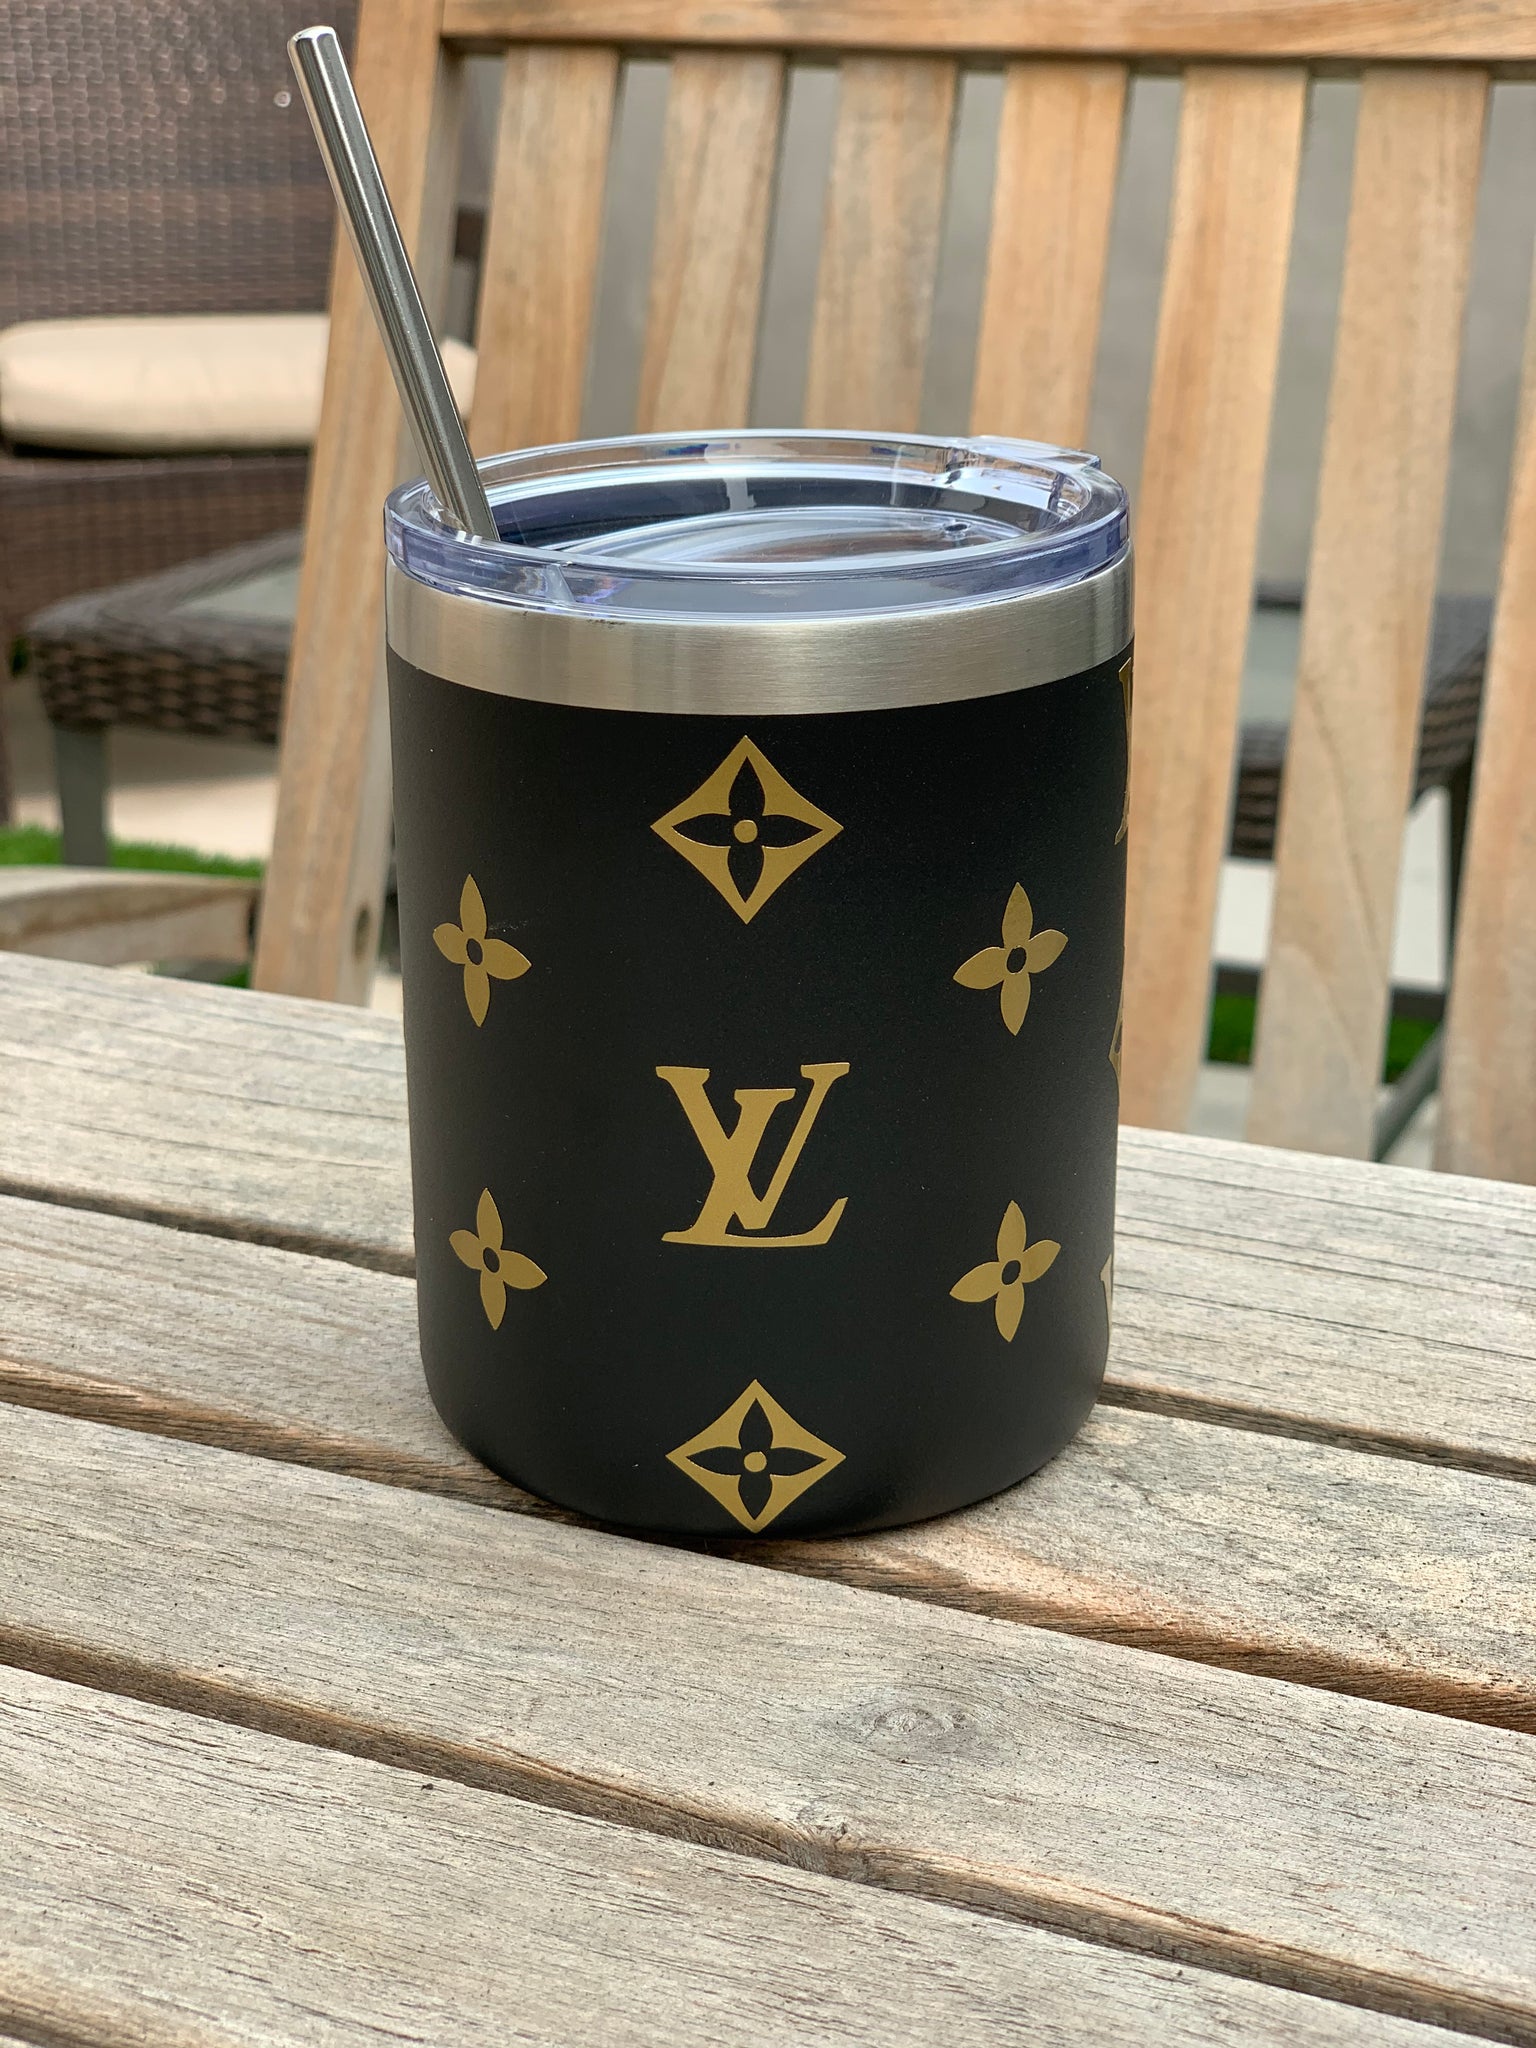 Louis Vuitton Cup  Yeti cup designs, Custom yeti cup, Custom tumbler cups